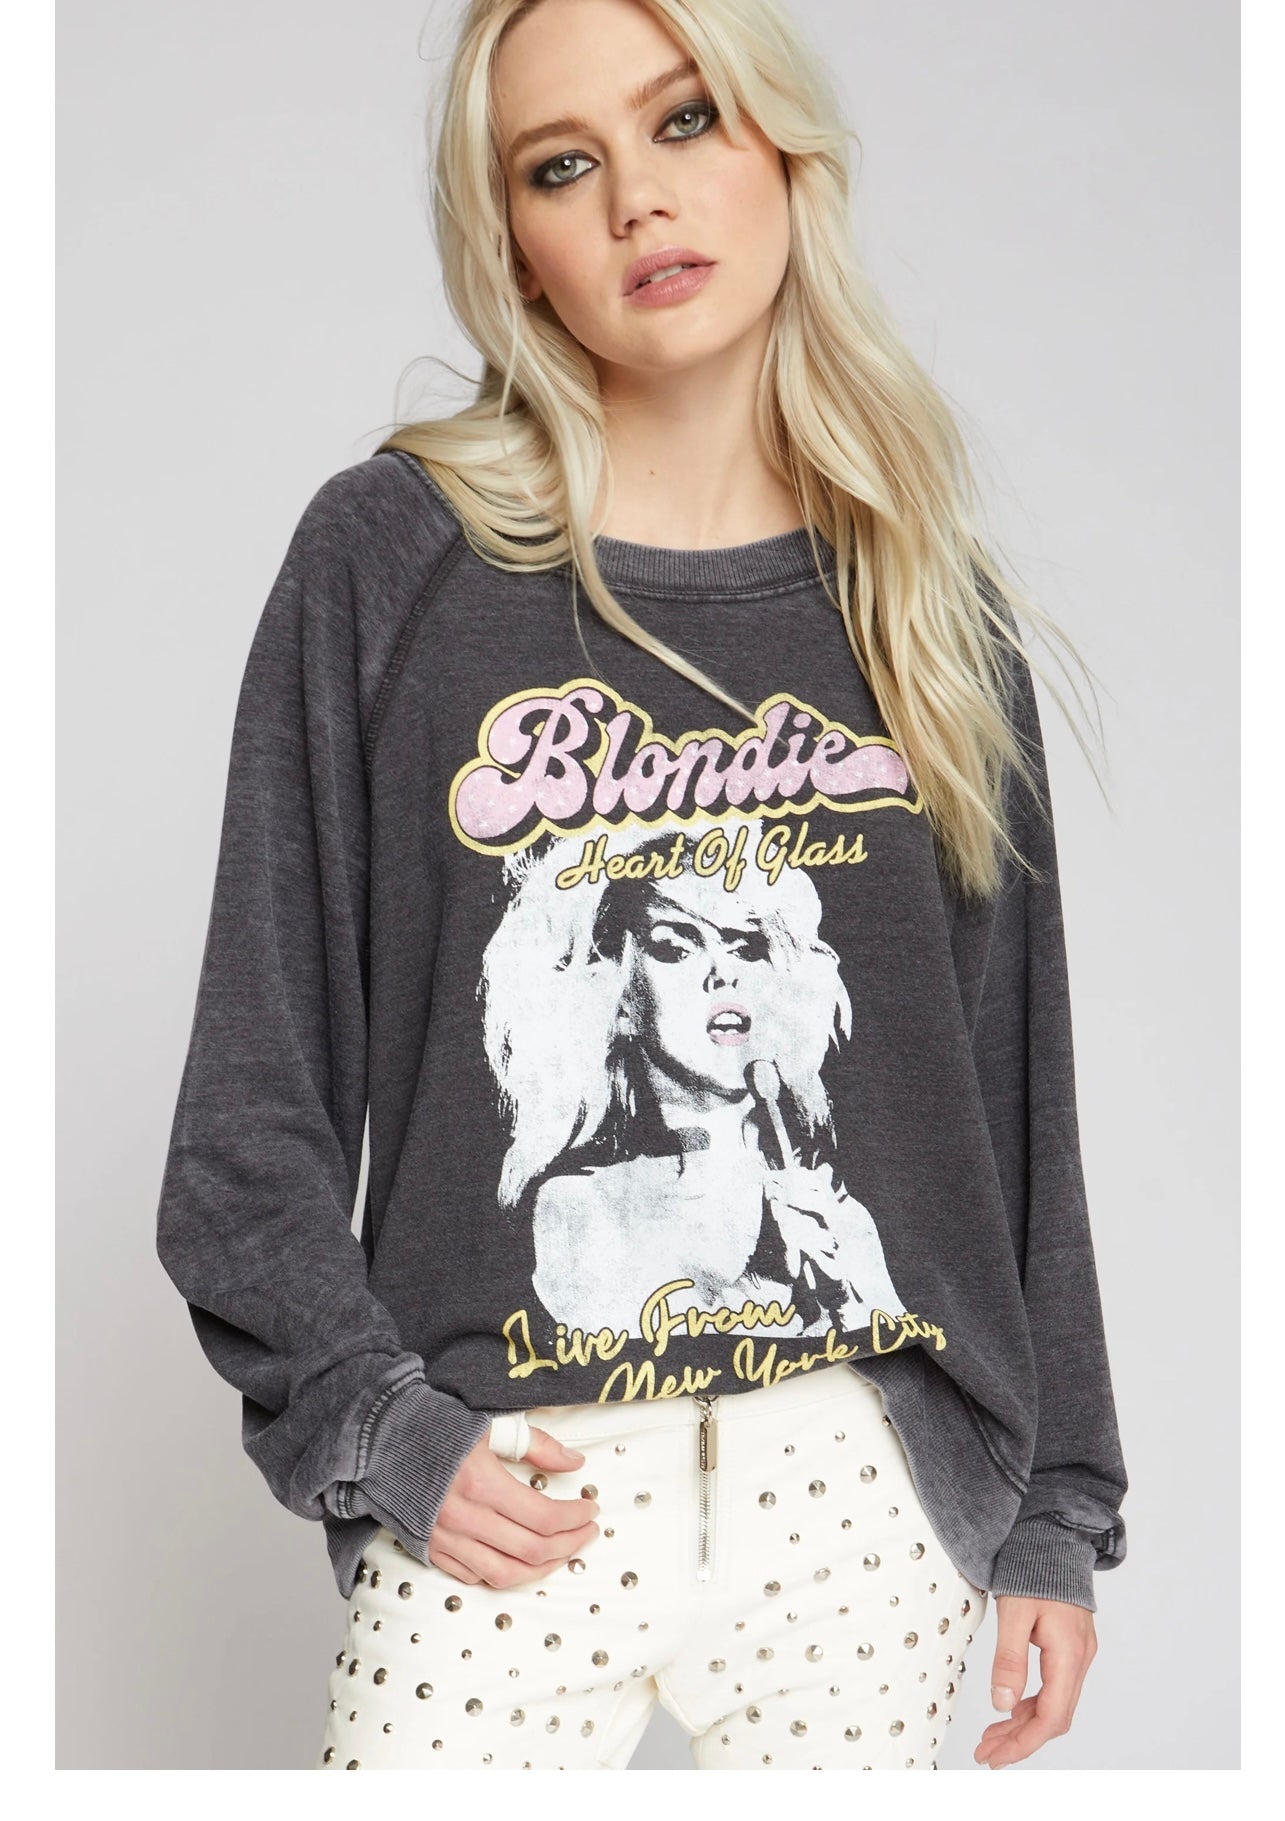 Recycled Karma Blondie Heart of Glass Sweatshirt at Dilaru Boutique Nutley NJ